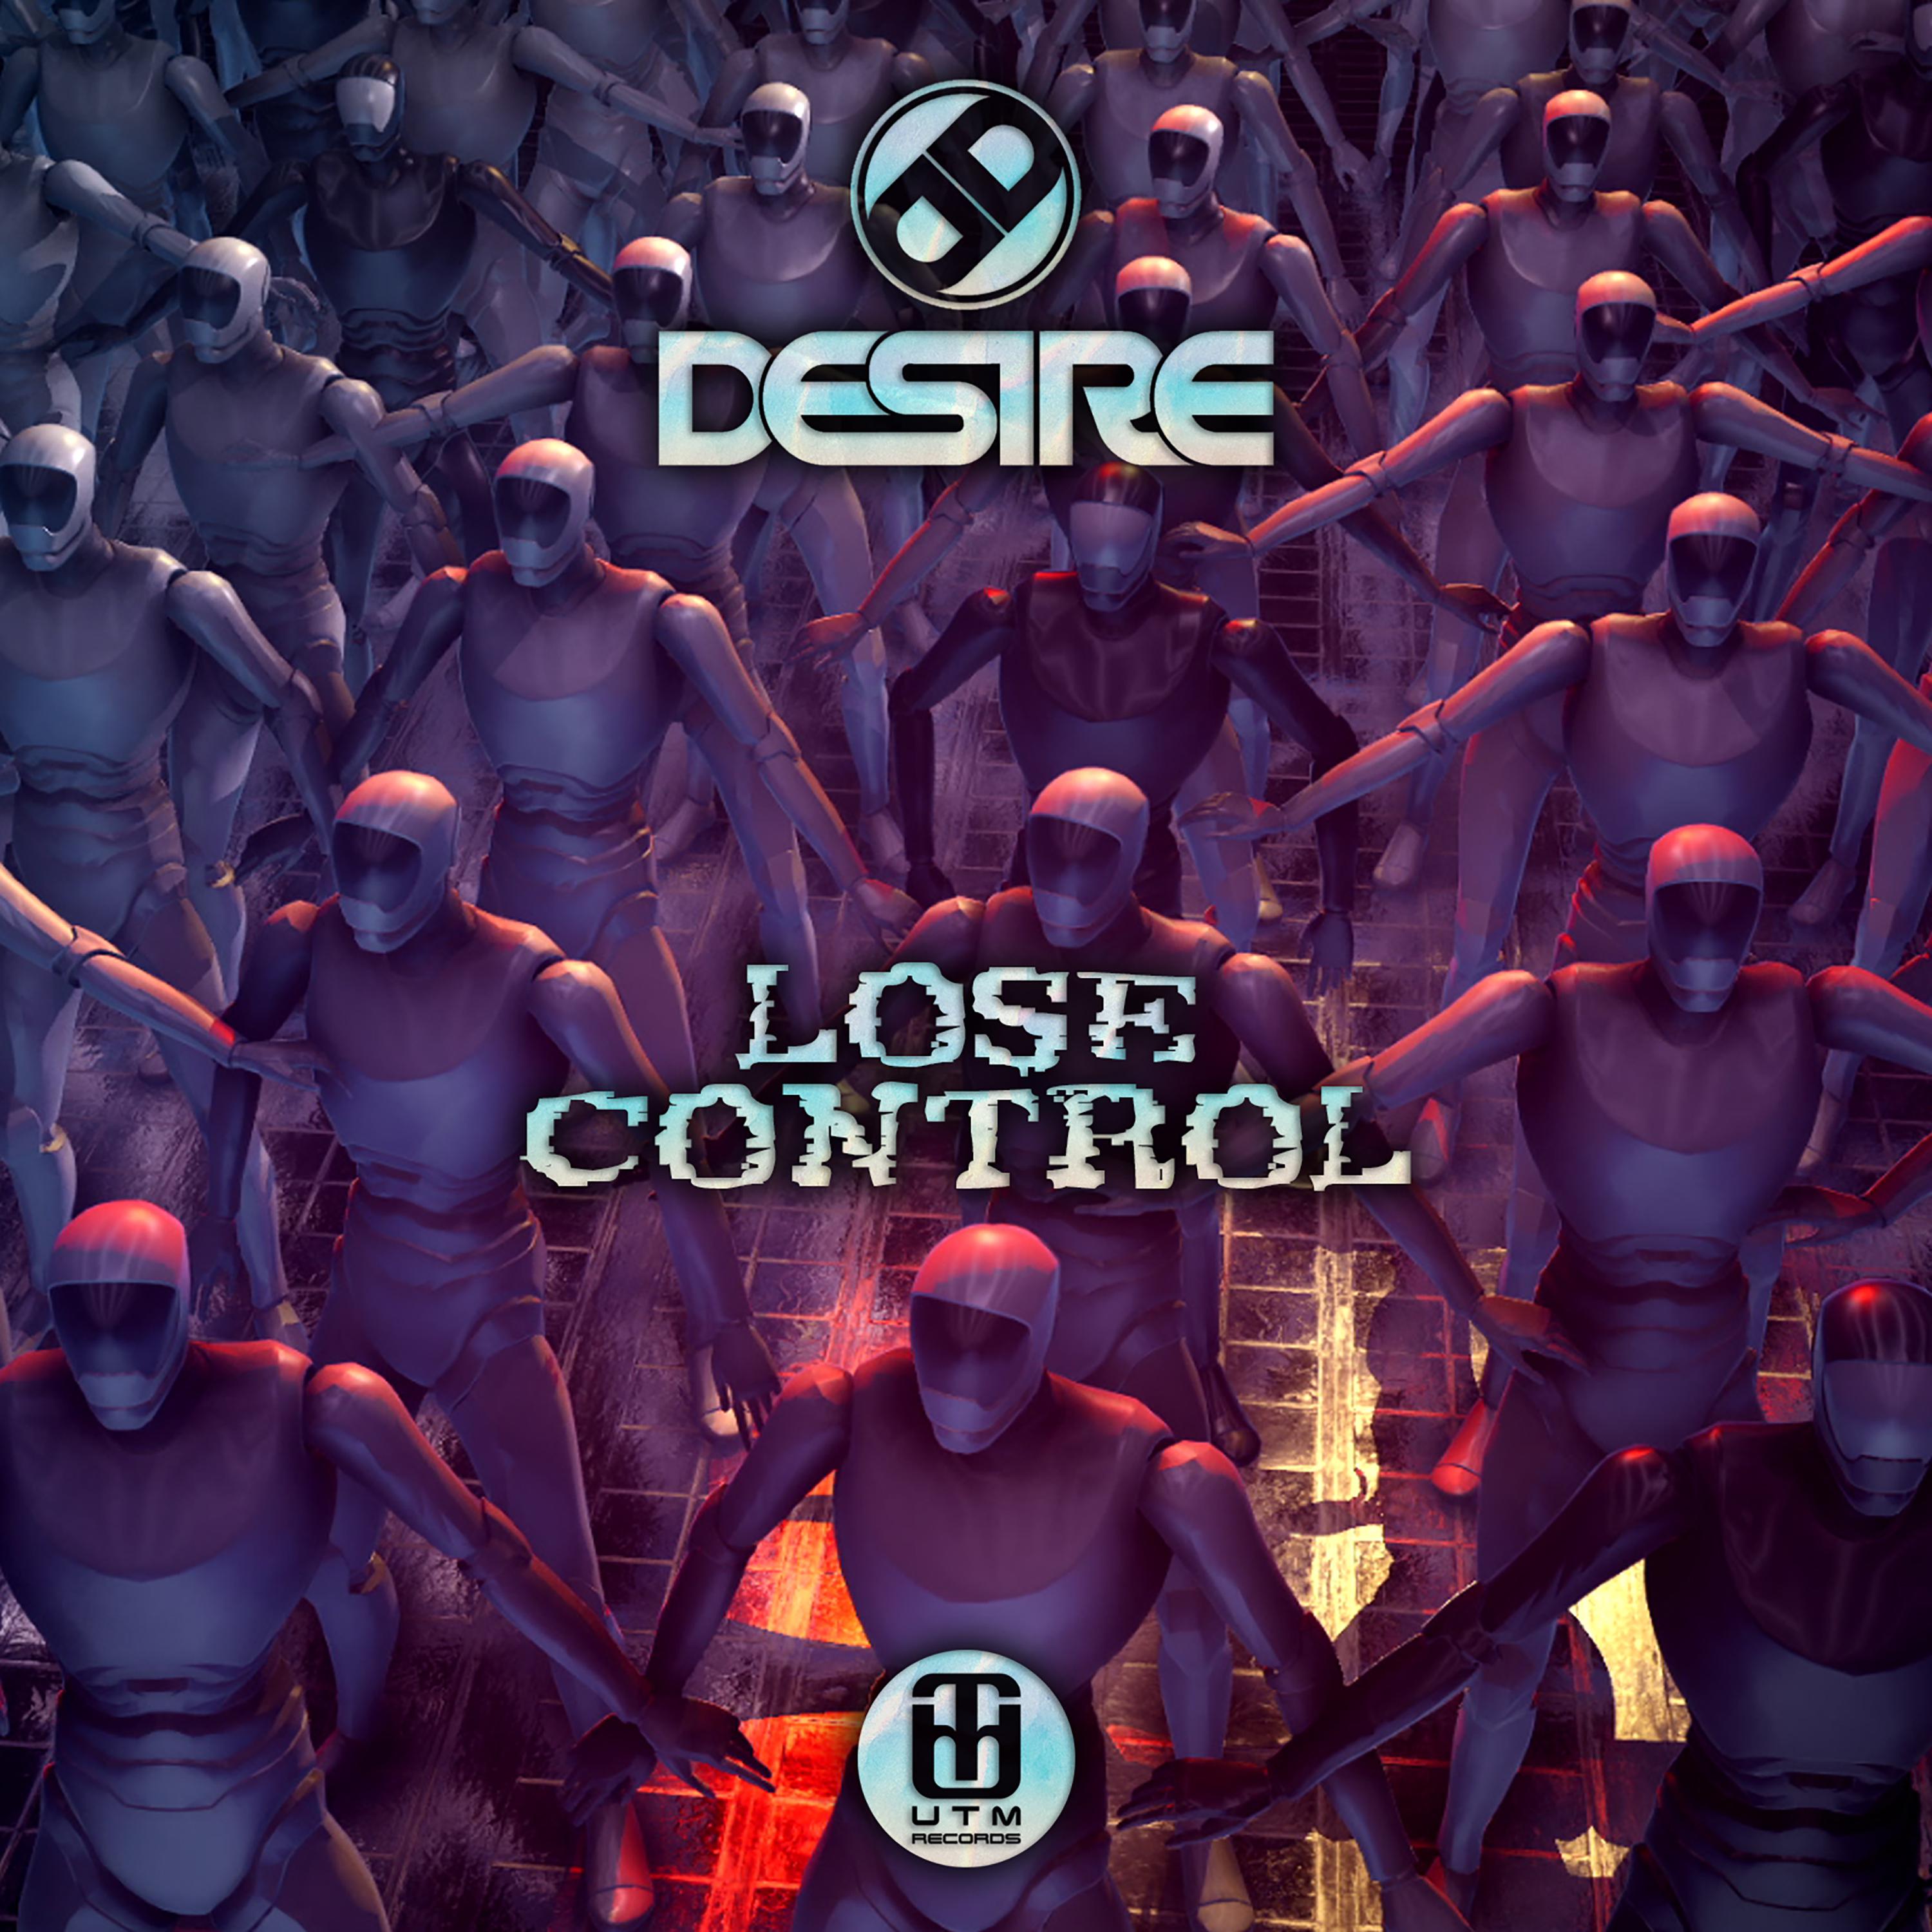 Desire - Lose Control